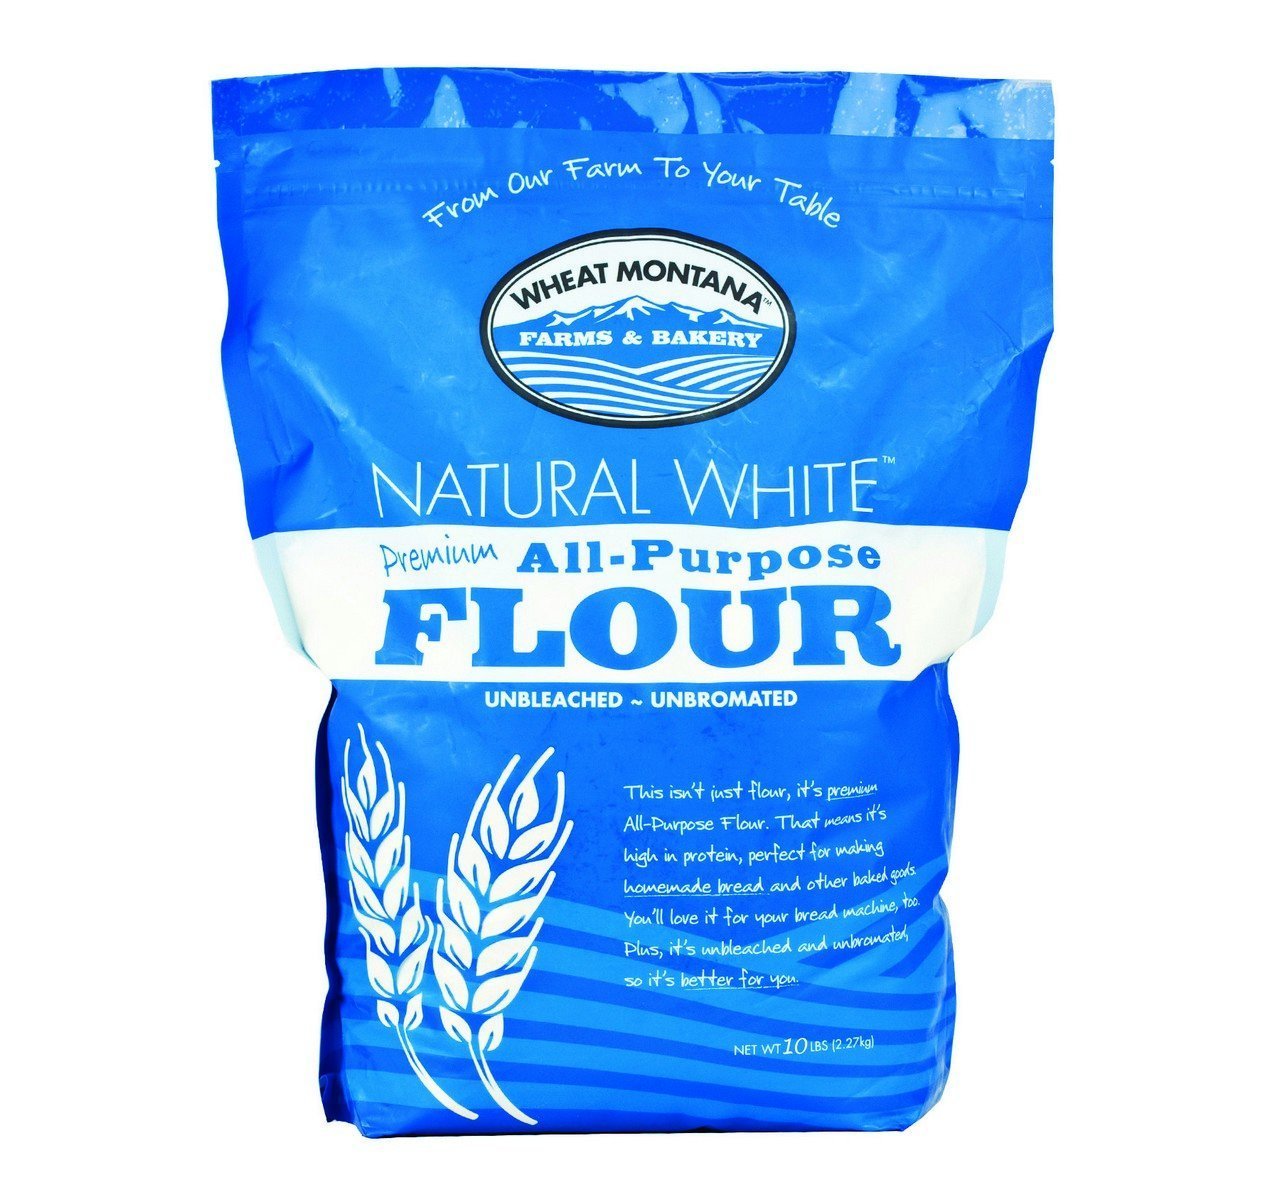 Wheat Montana多功能白面粉(两包装 – 10磅)